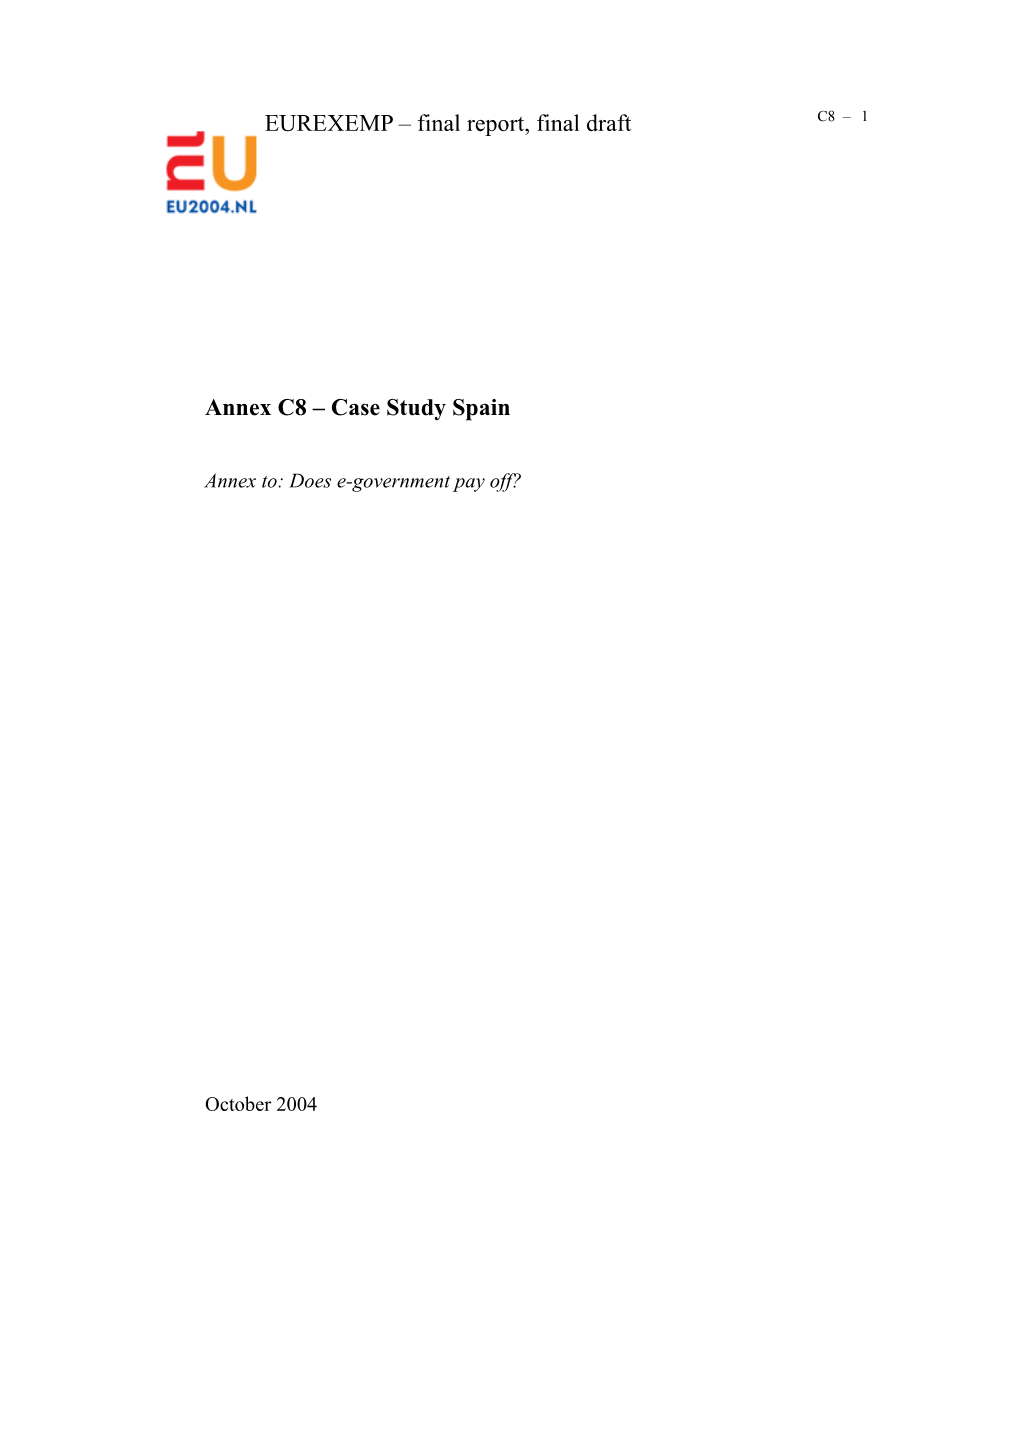 Annex C8 Case Study Spain